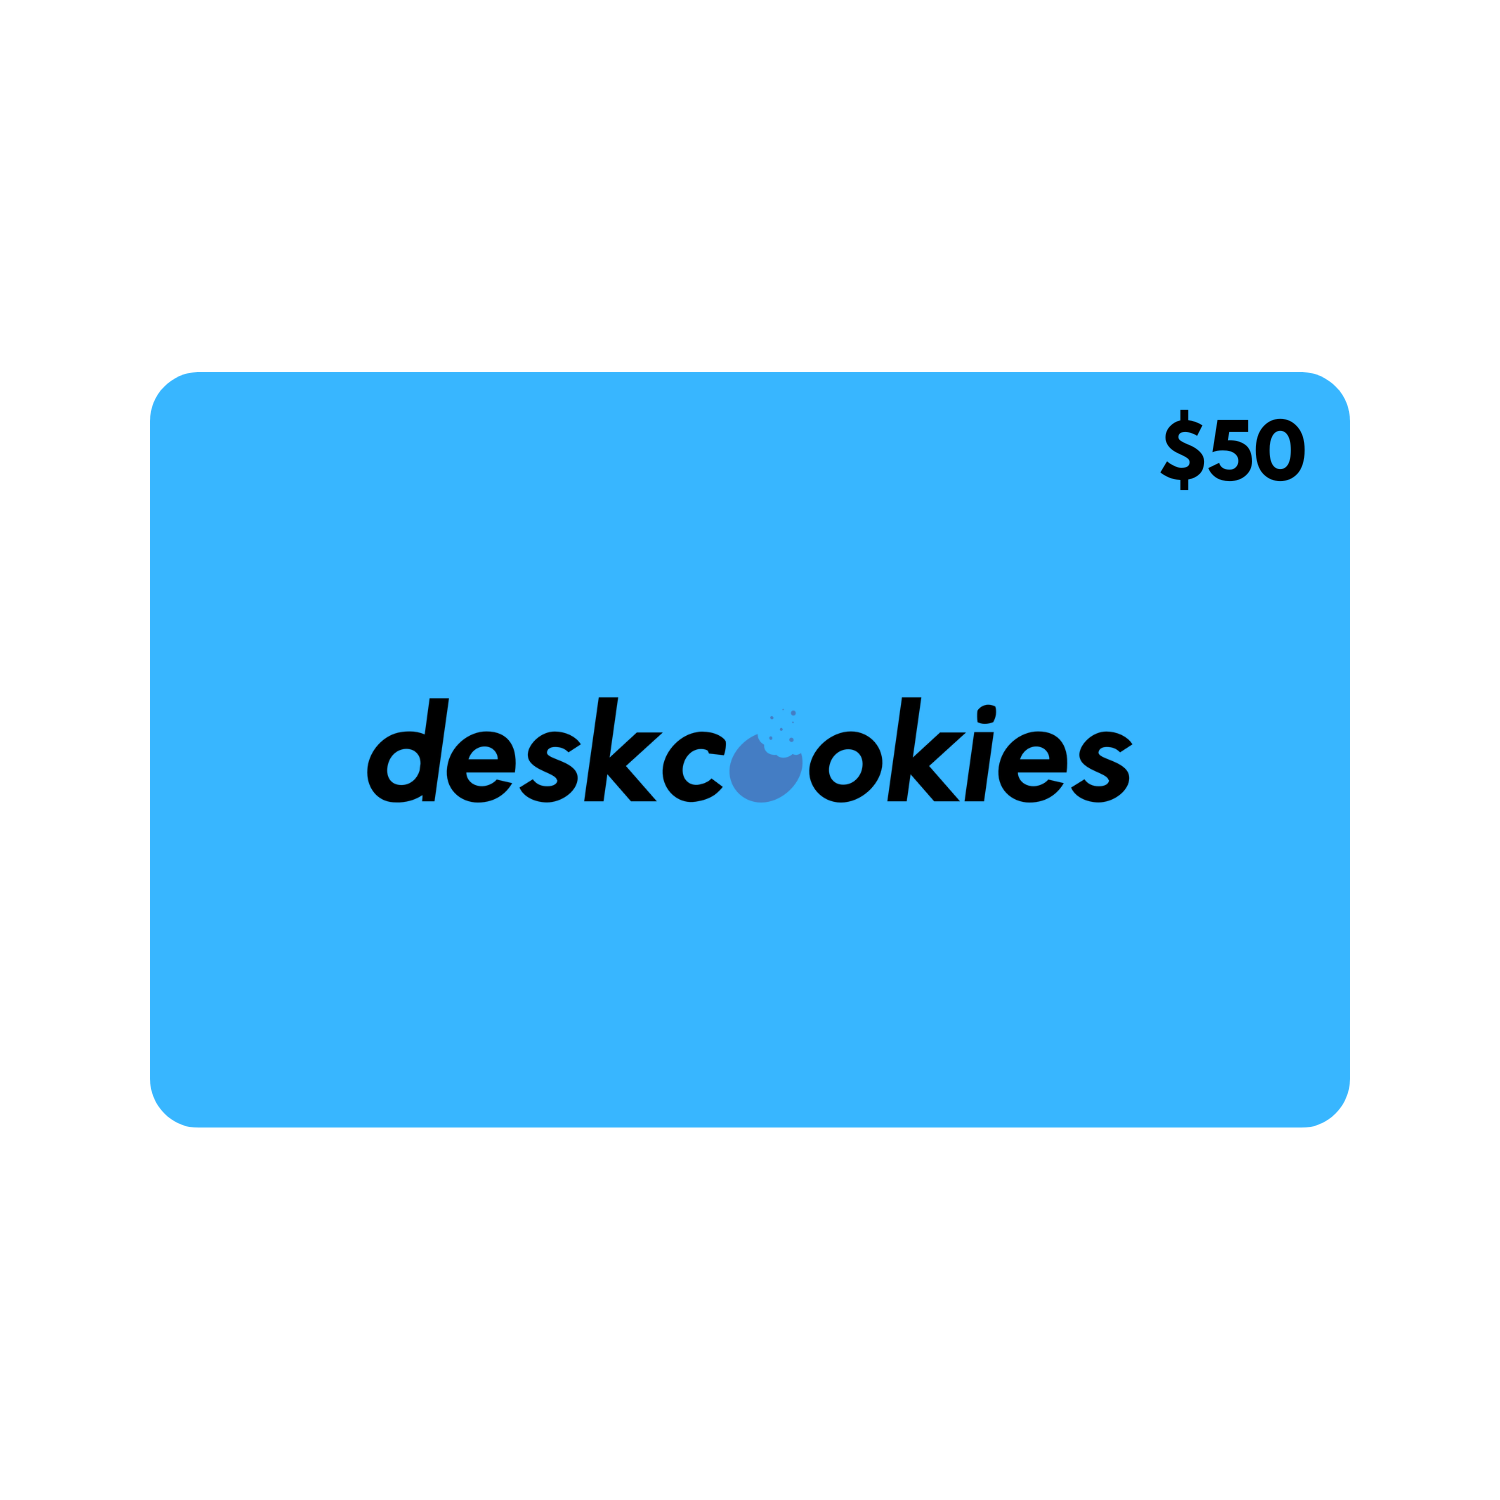 A $50 Desk Cookies digital gift card.